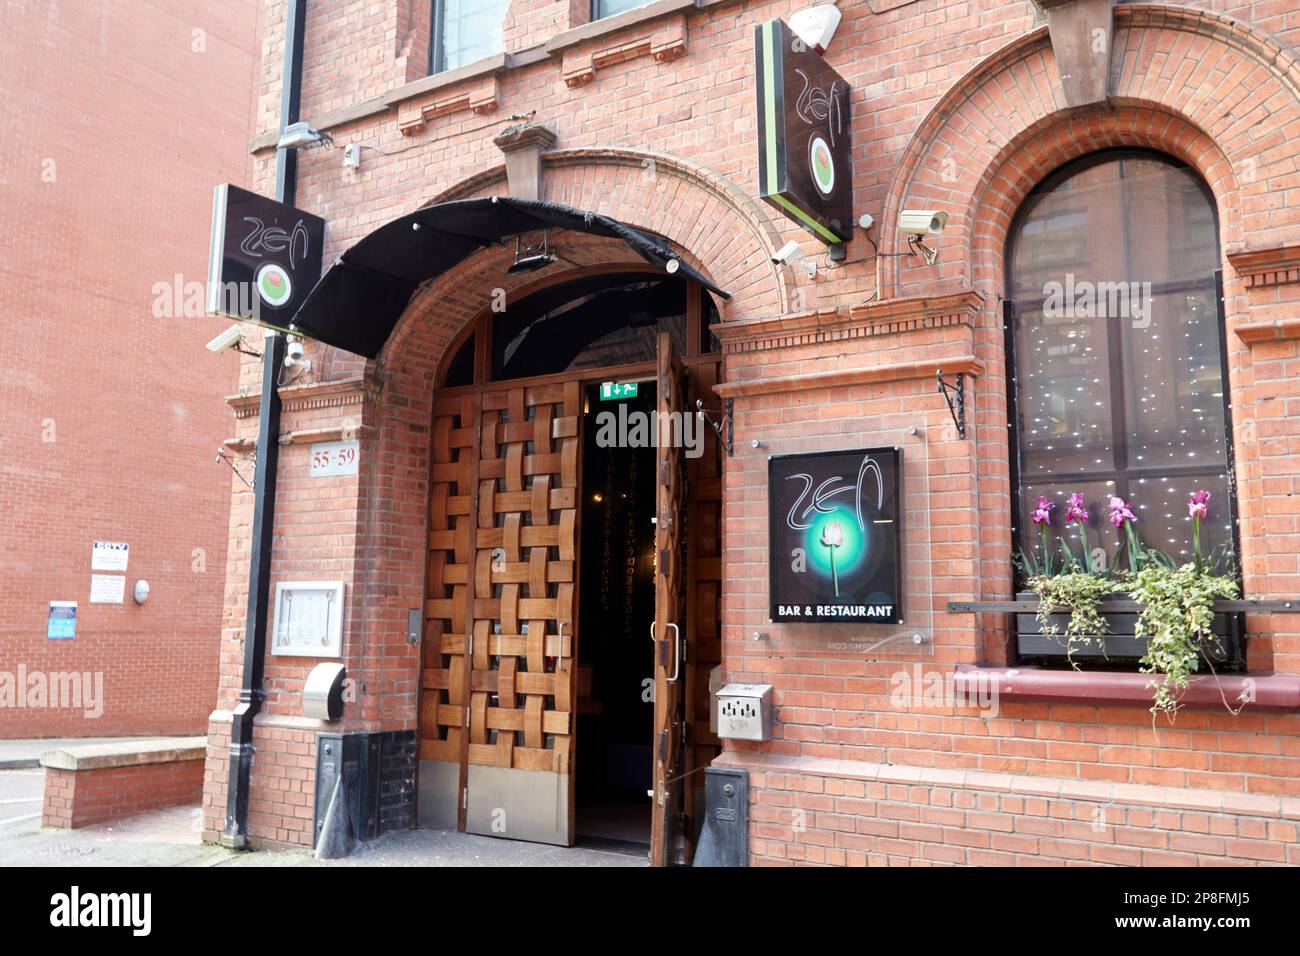 zen bar and restaurant adelaide st Belfast Northern Ireland UK Stock Photo